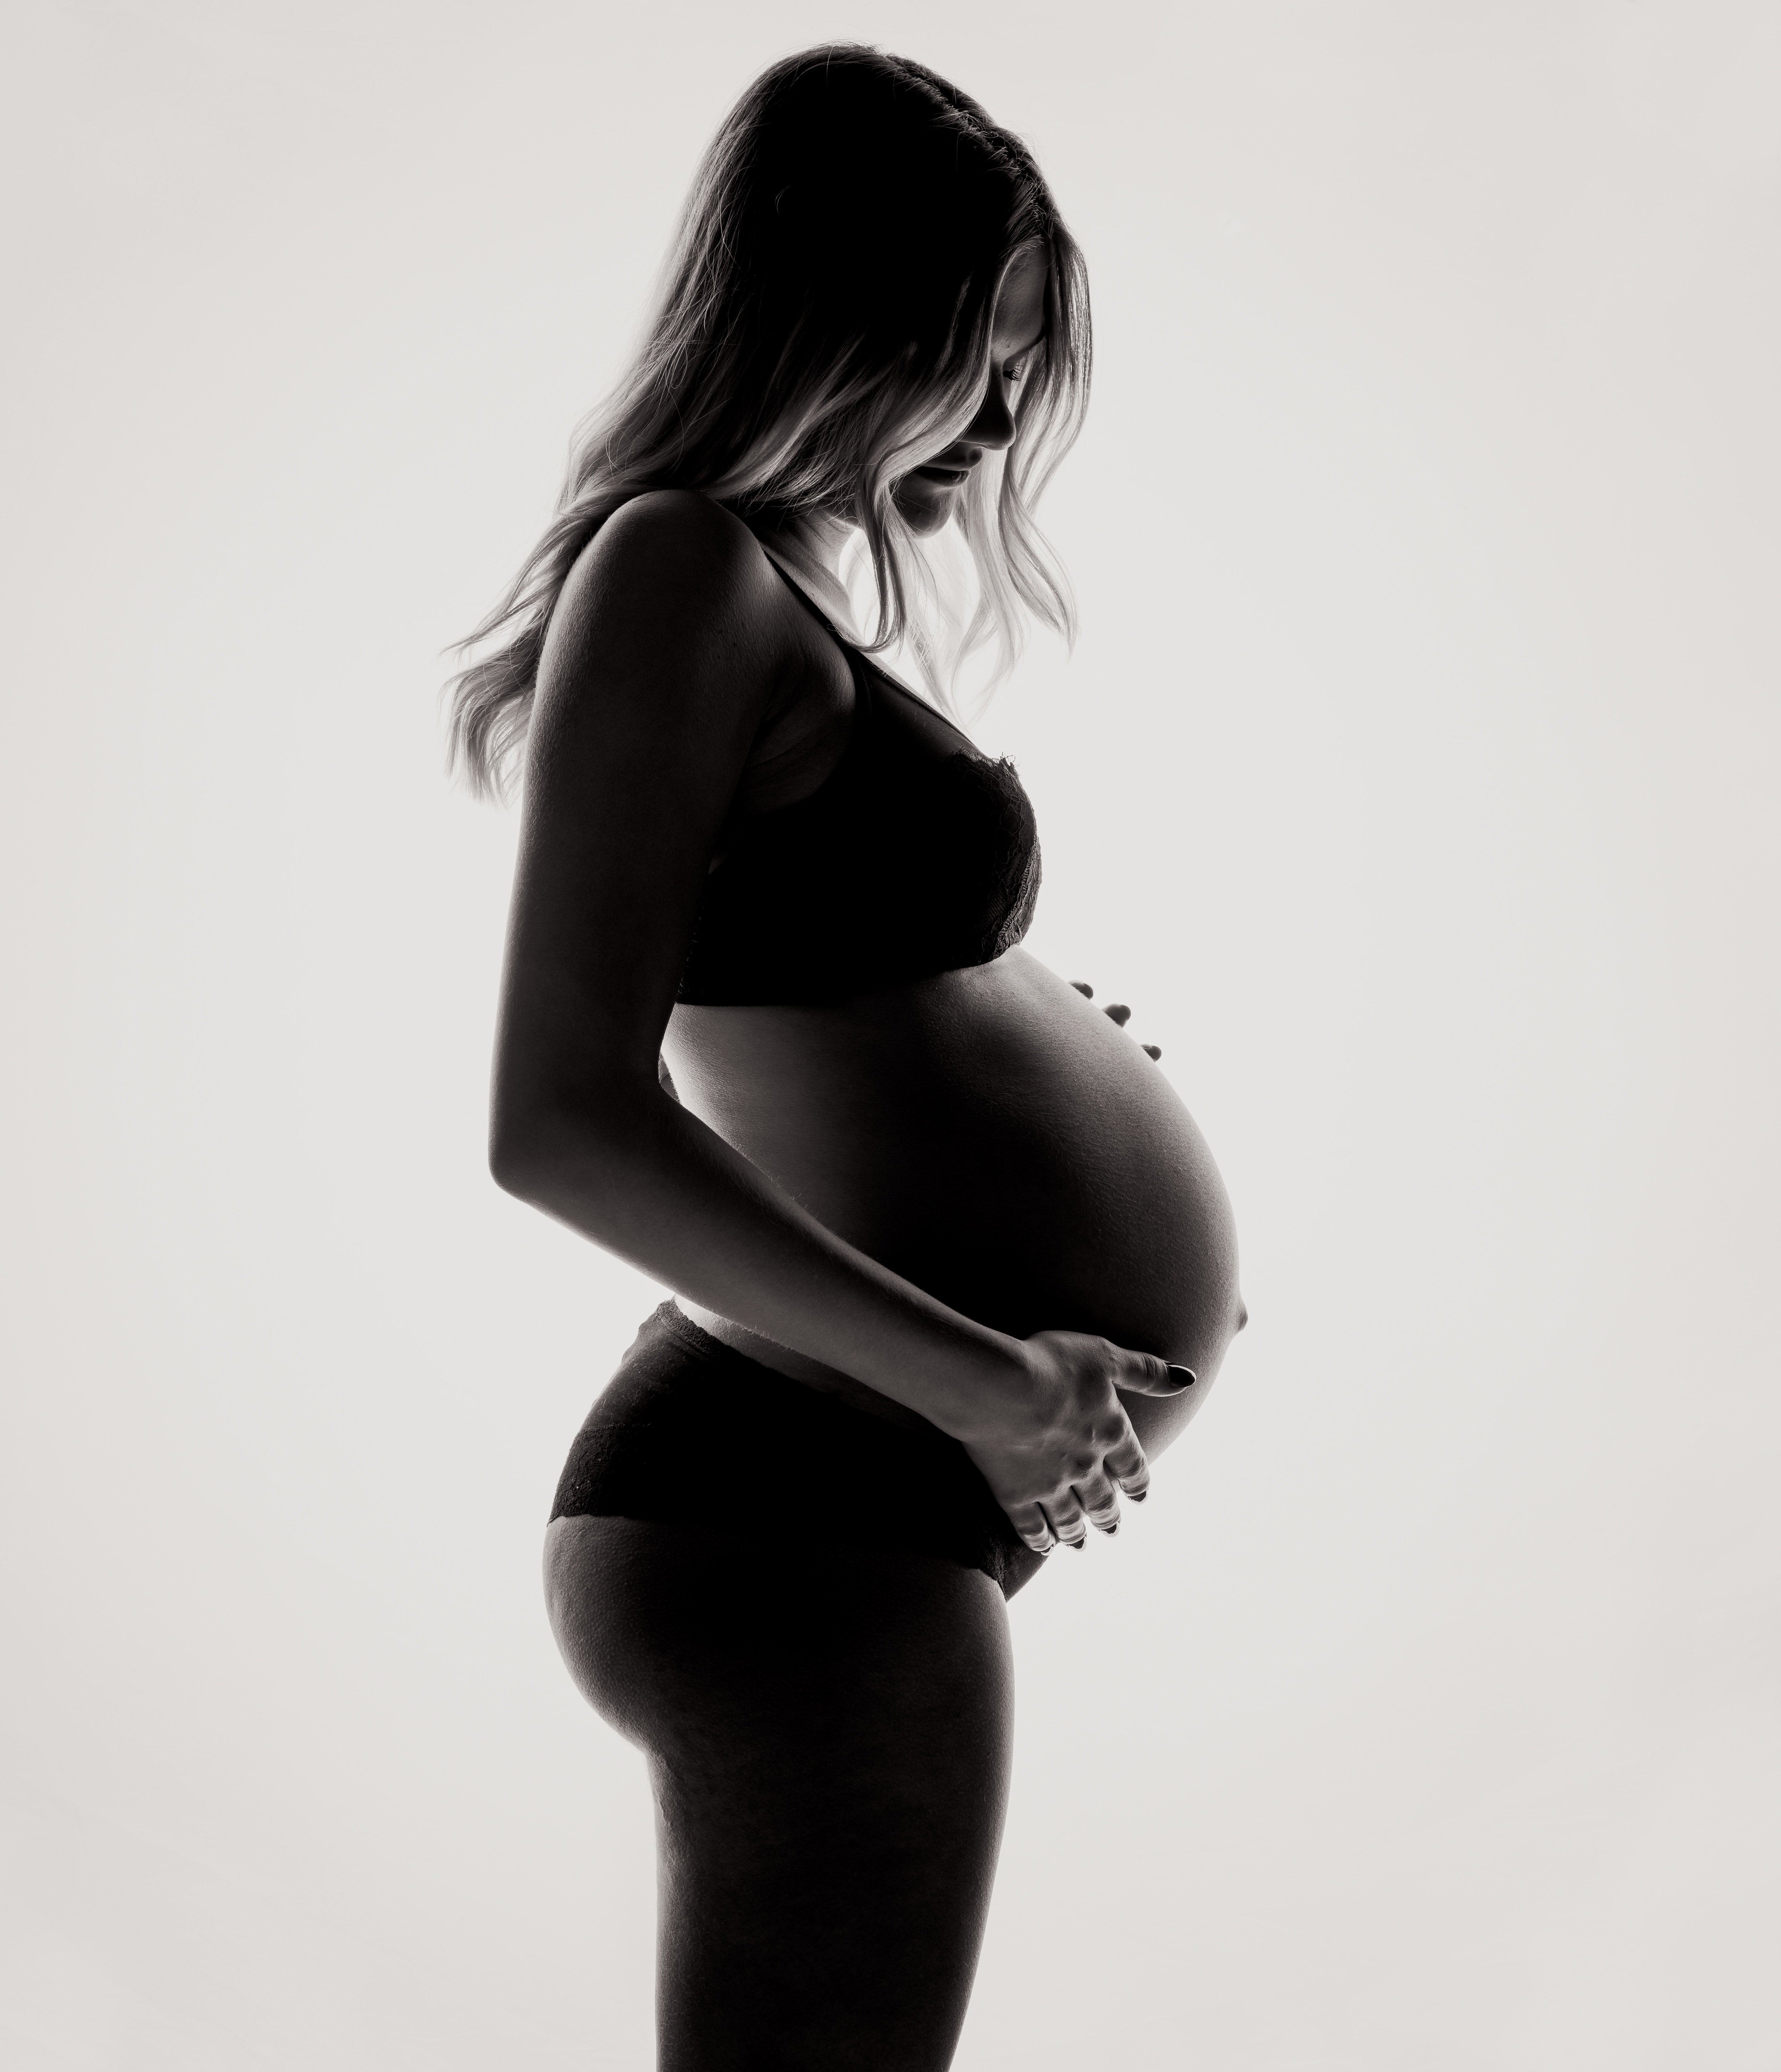 A monochrome picture of a pregnant lady. | Source: Unsplash